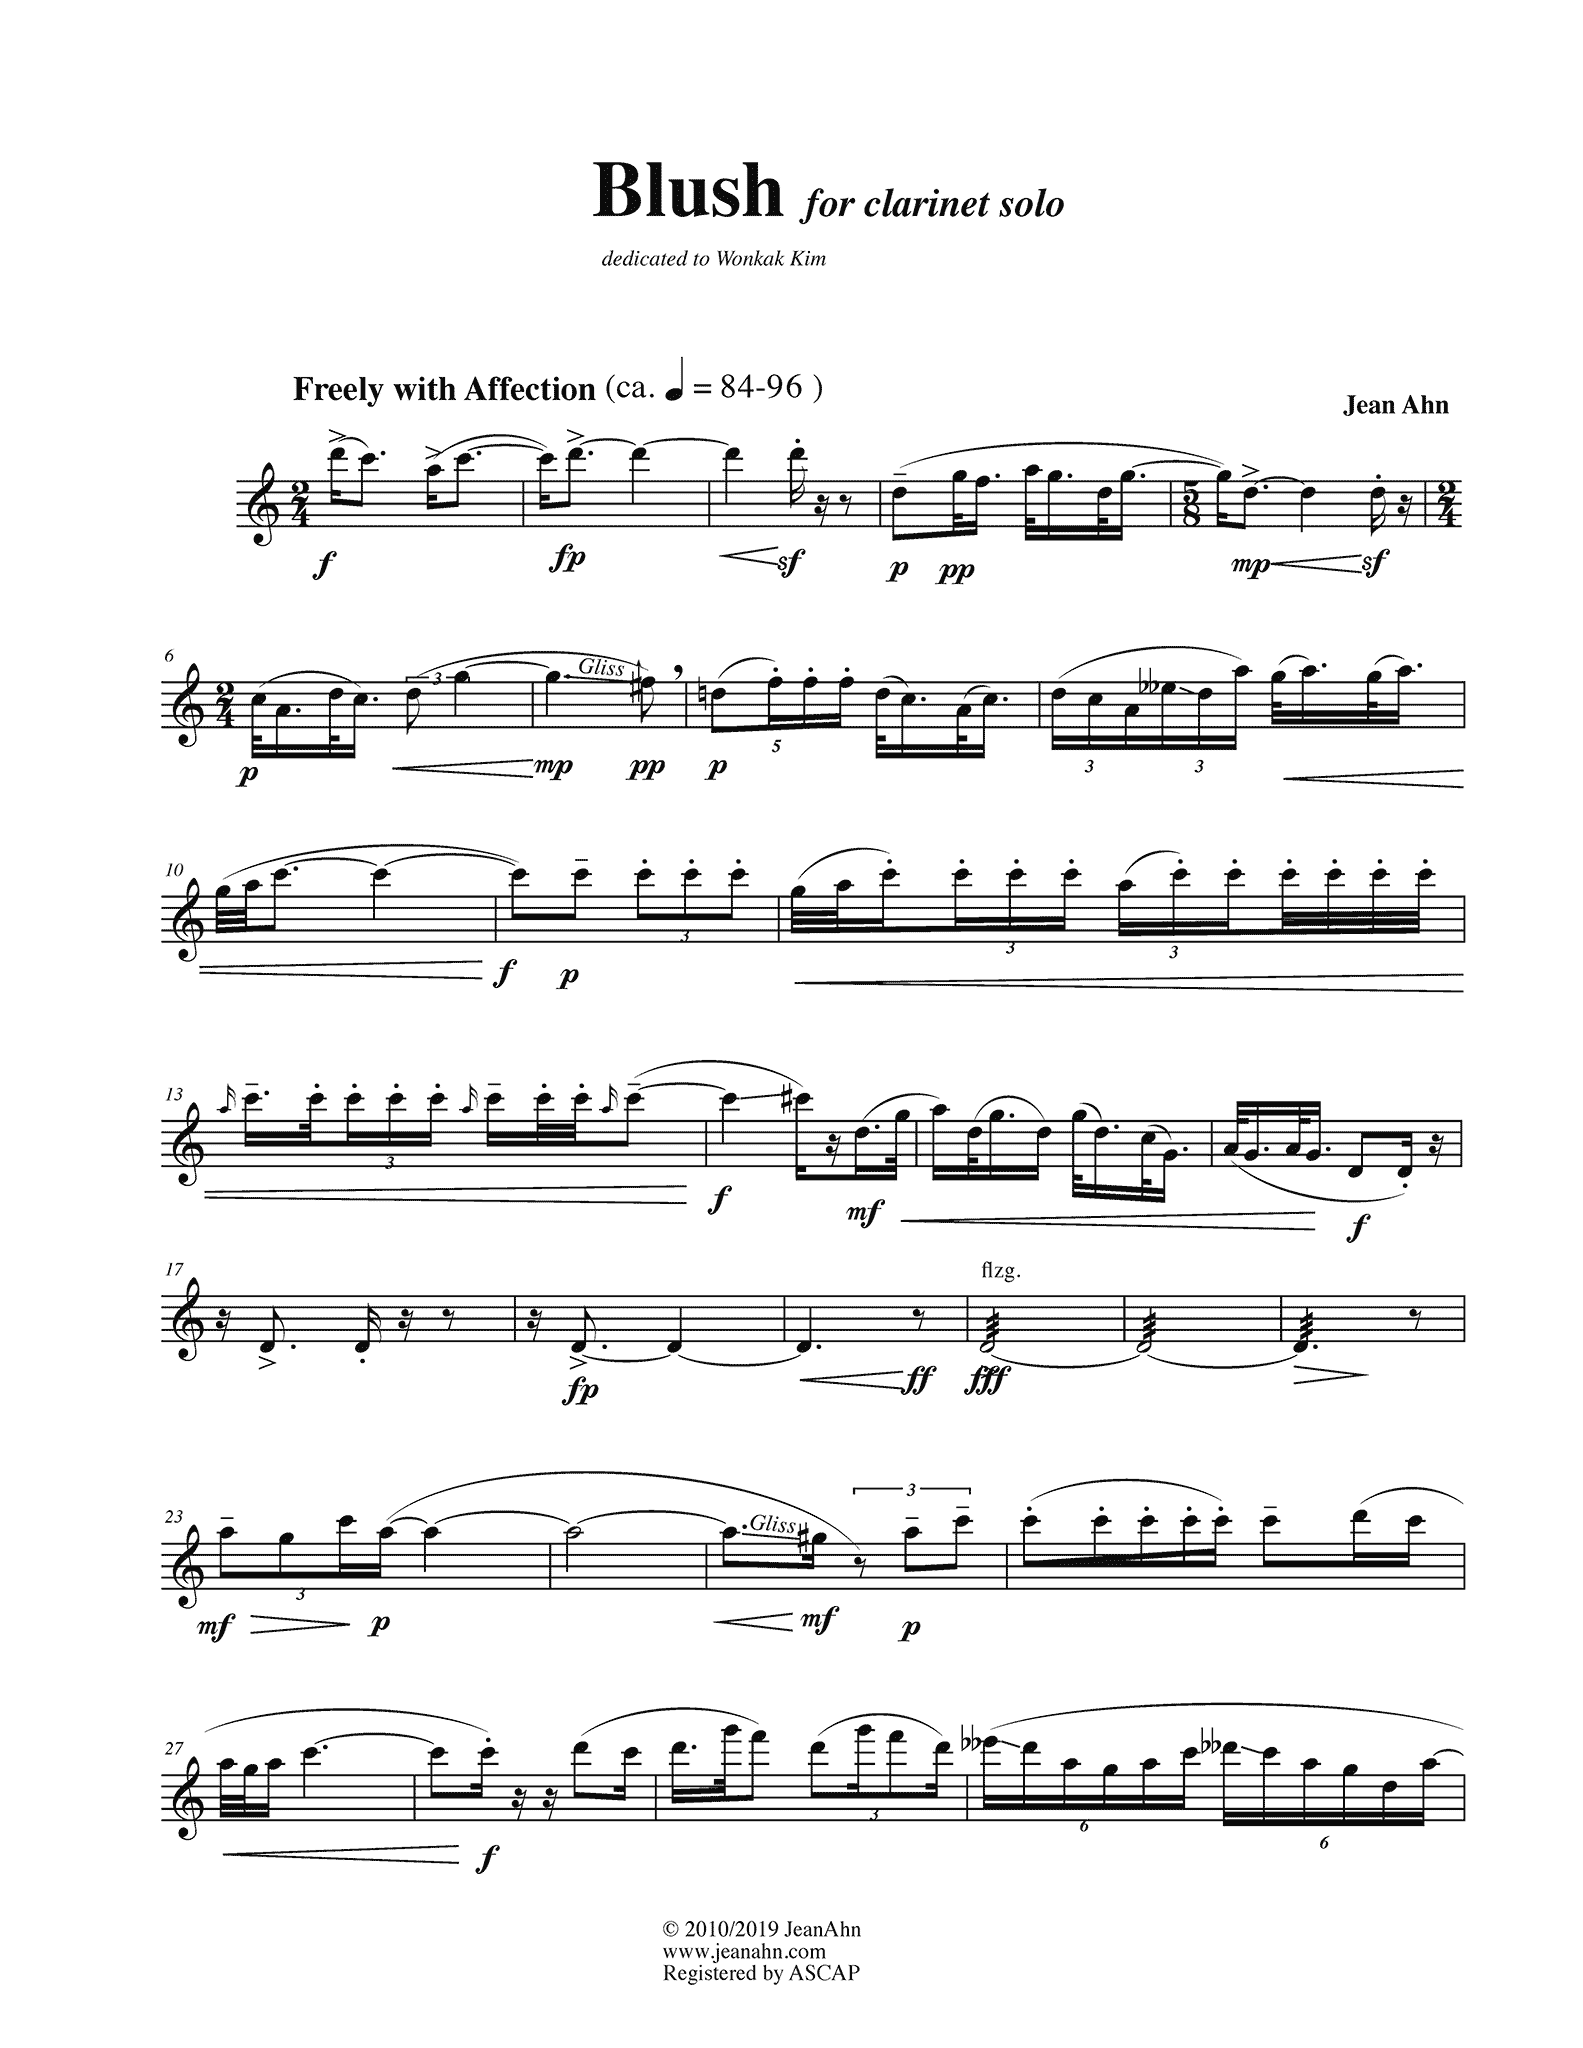 Jean Ahn Blush for unaccompanied clarinet page 1